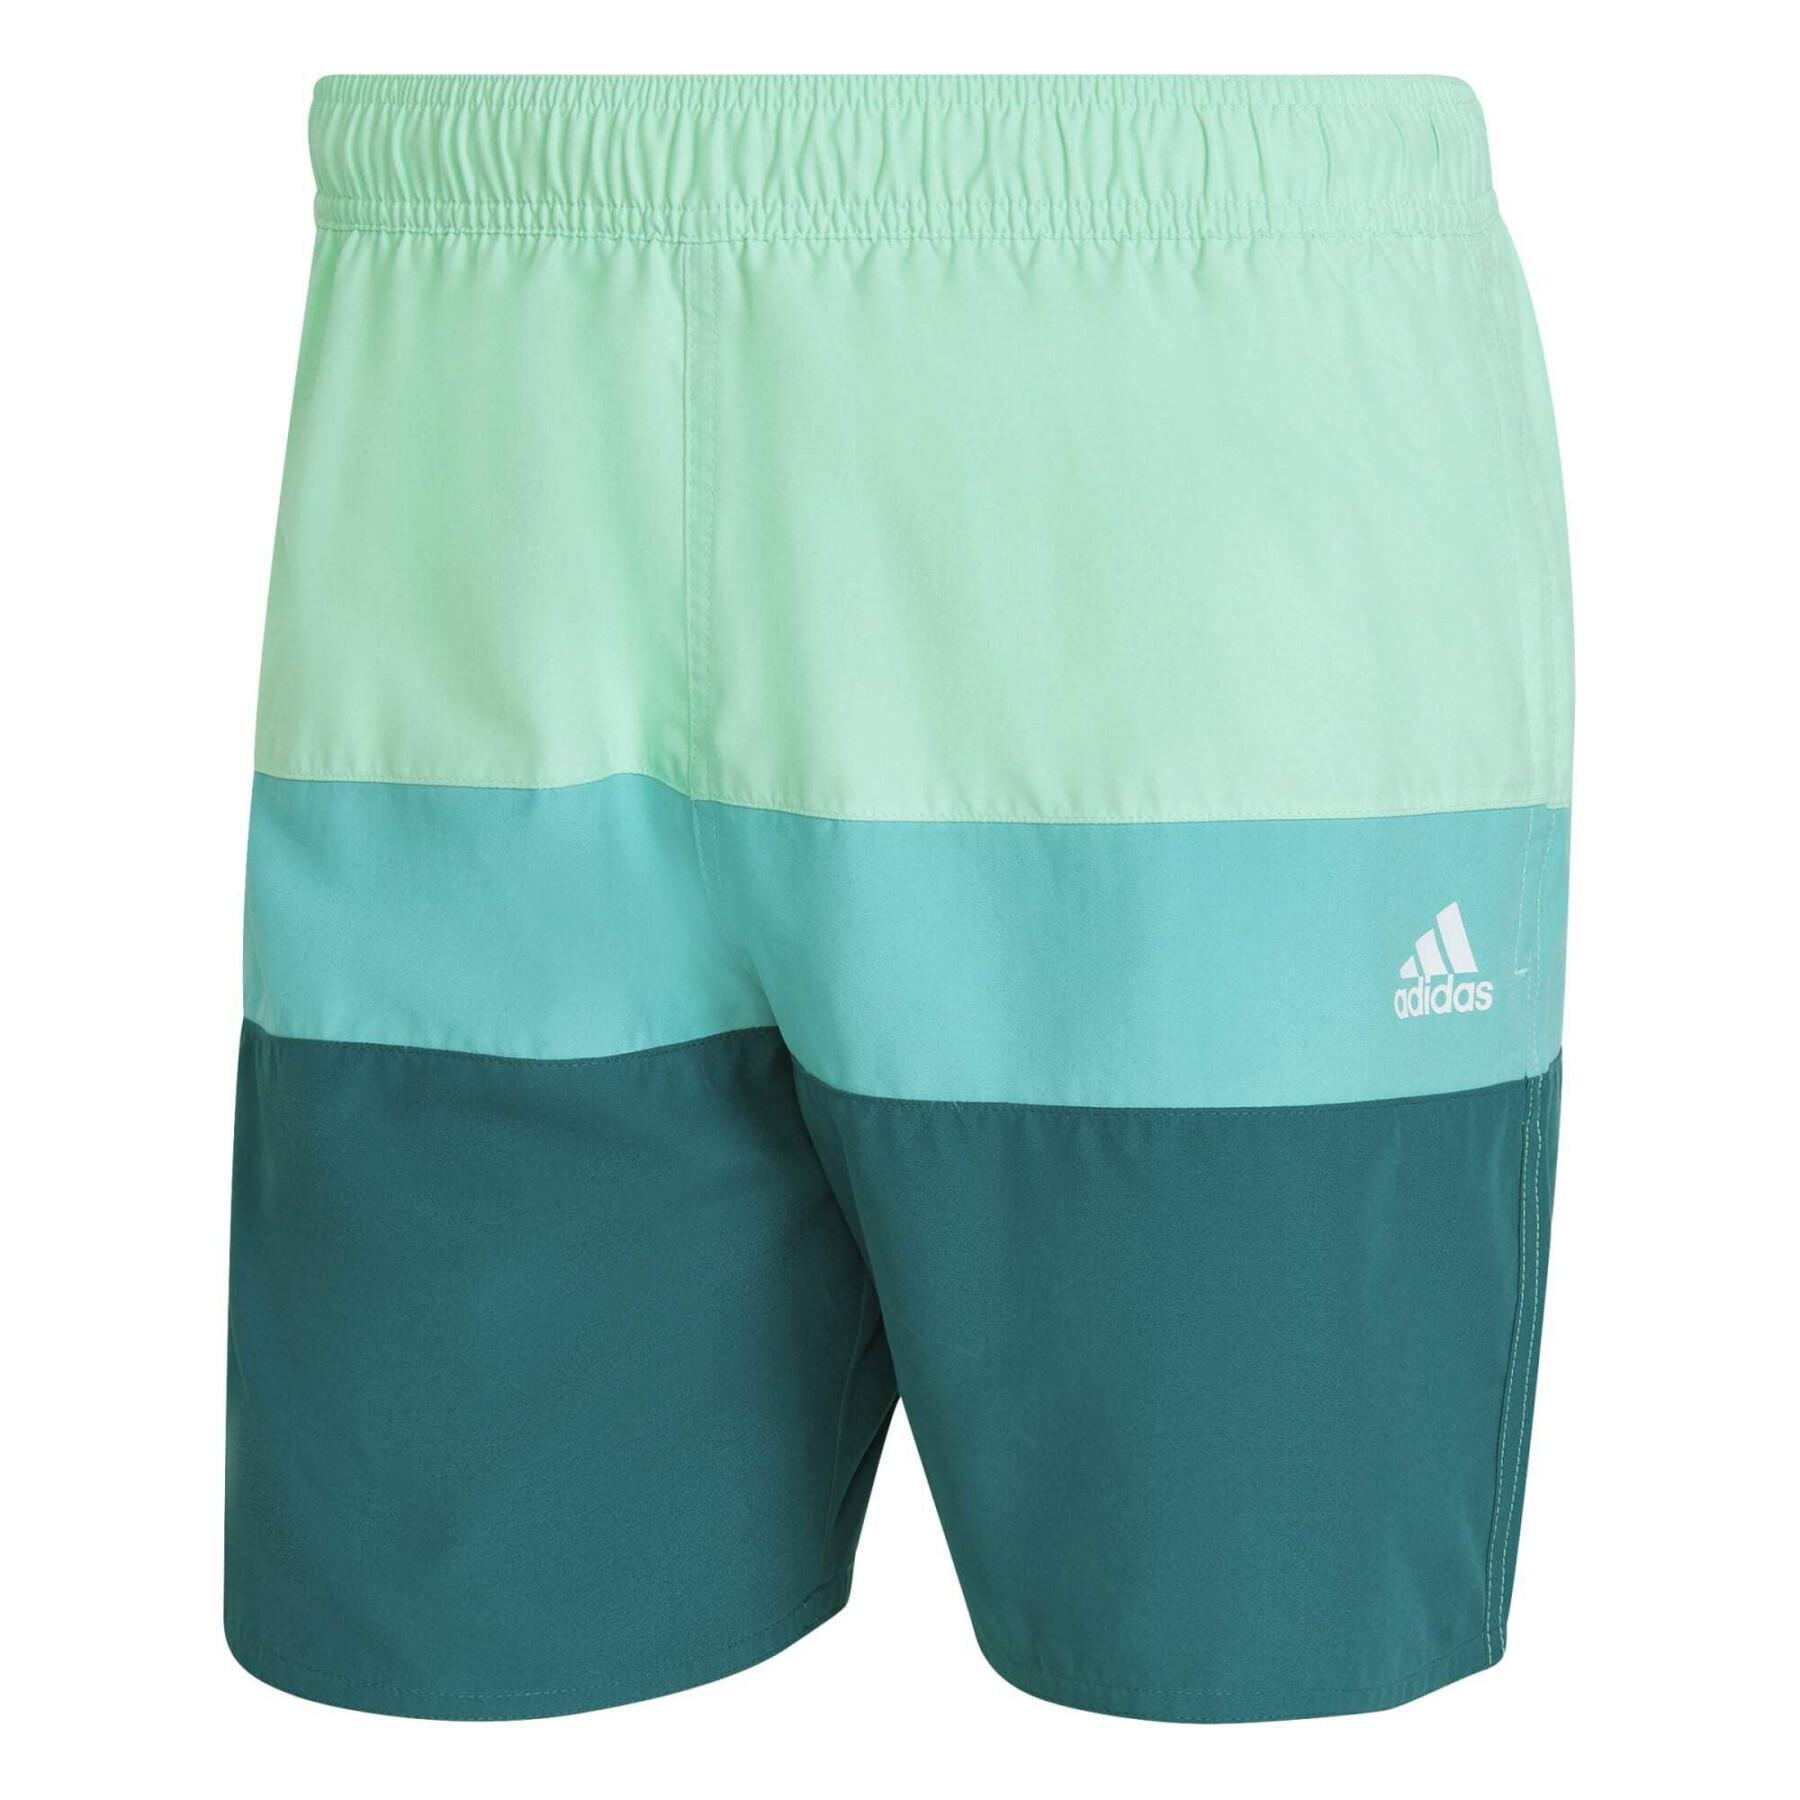 Short swim shorts with color blocks adidas